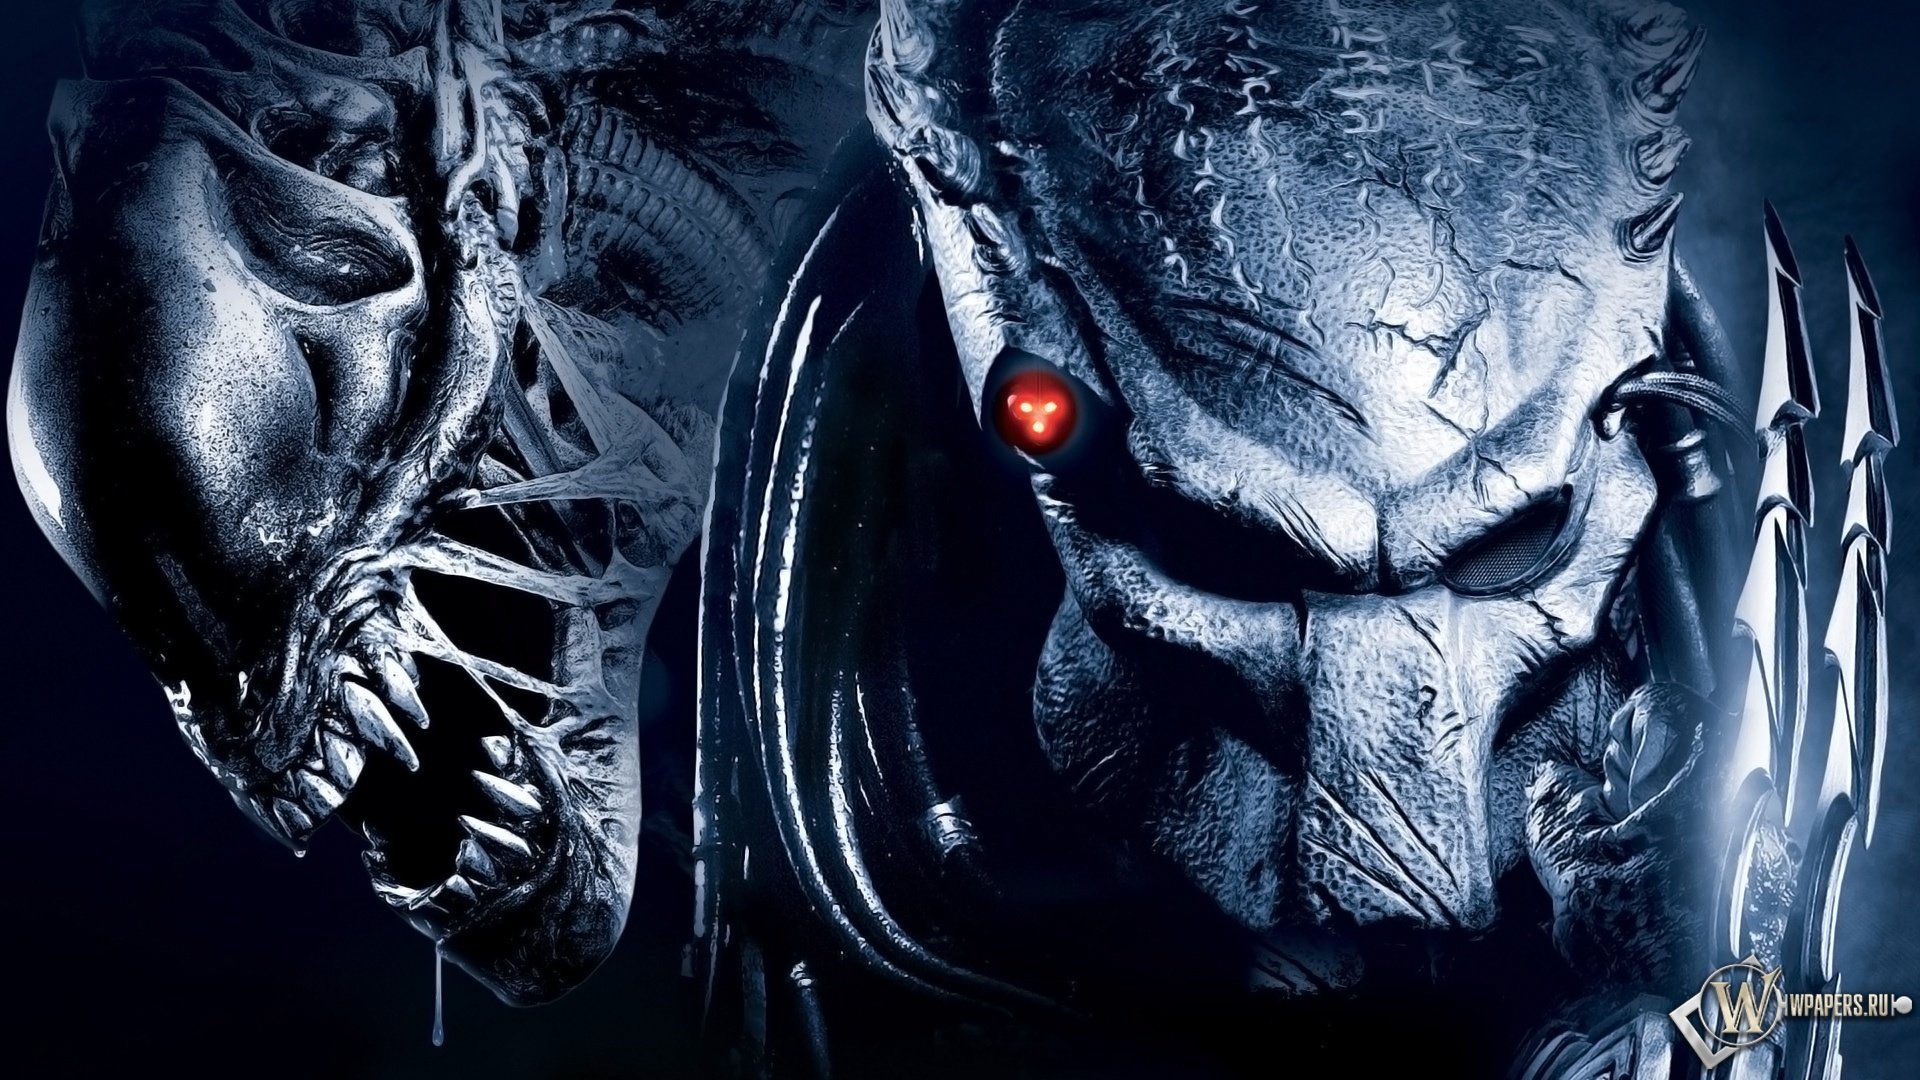 High resolution AVP: Alien Vs. Predator movie 1080p wallpaper ID:270181 for PC